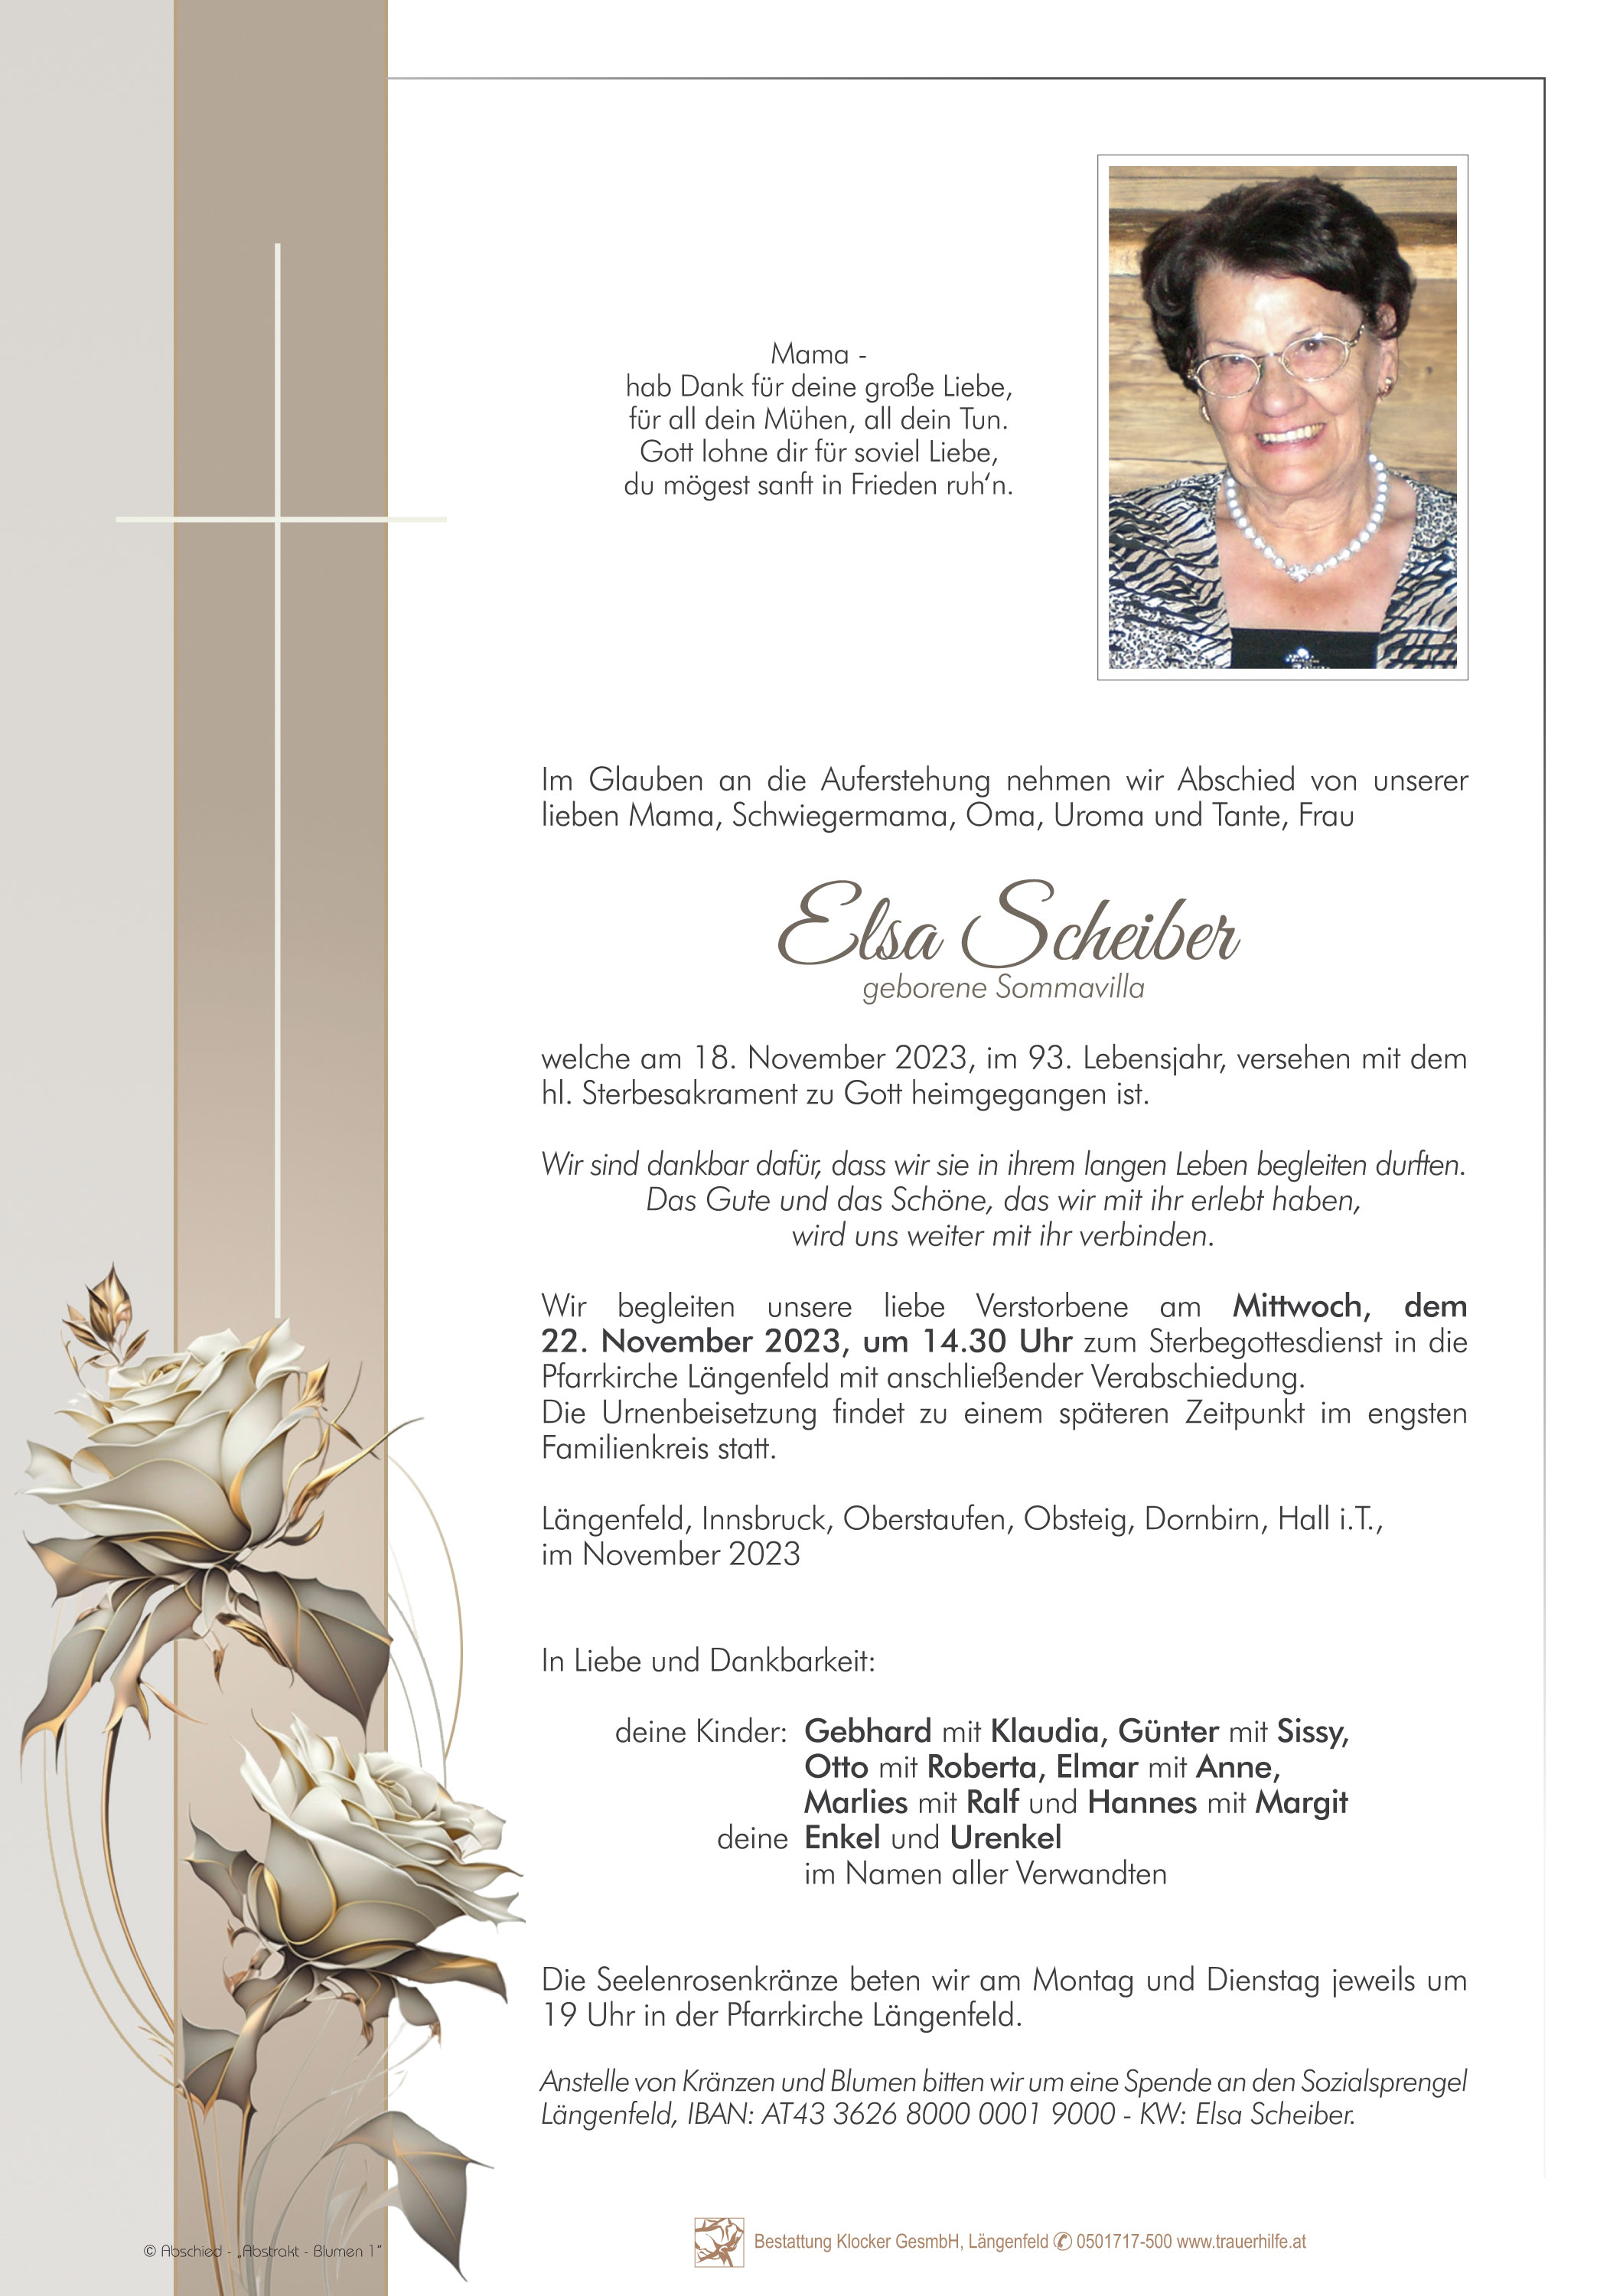 Elsa Scheiber